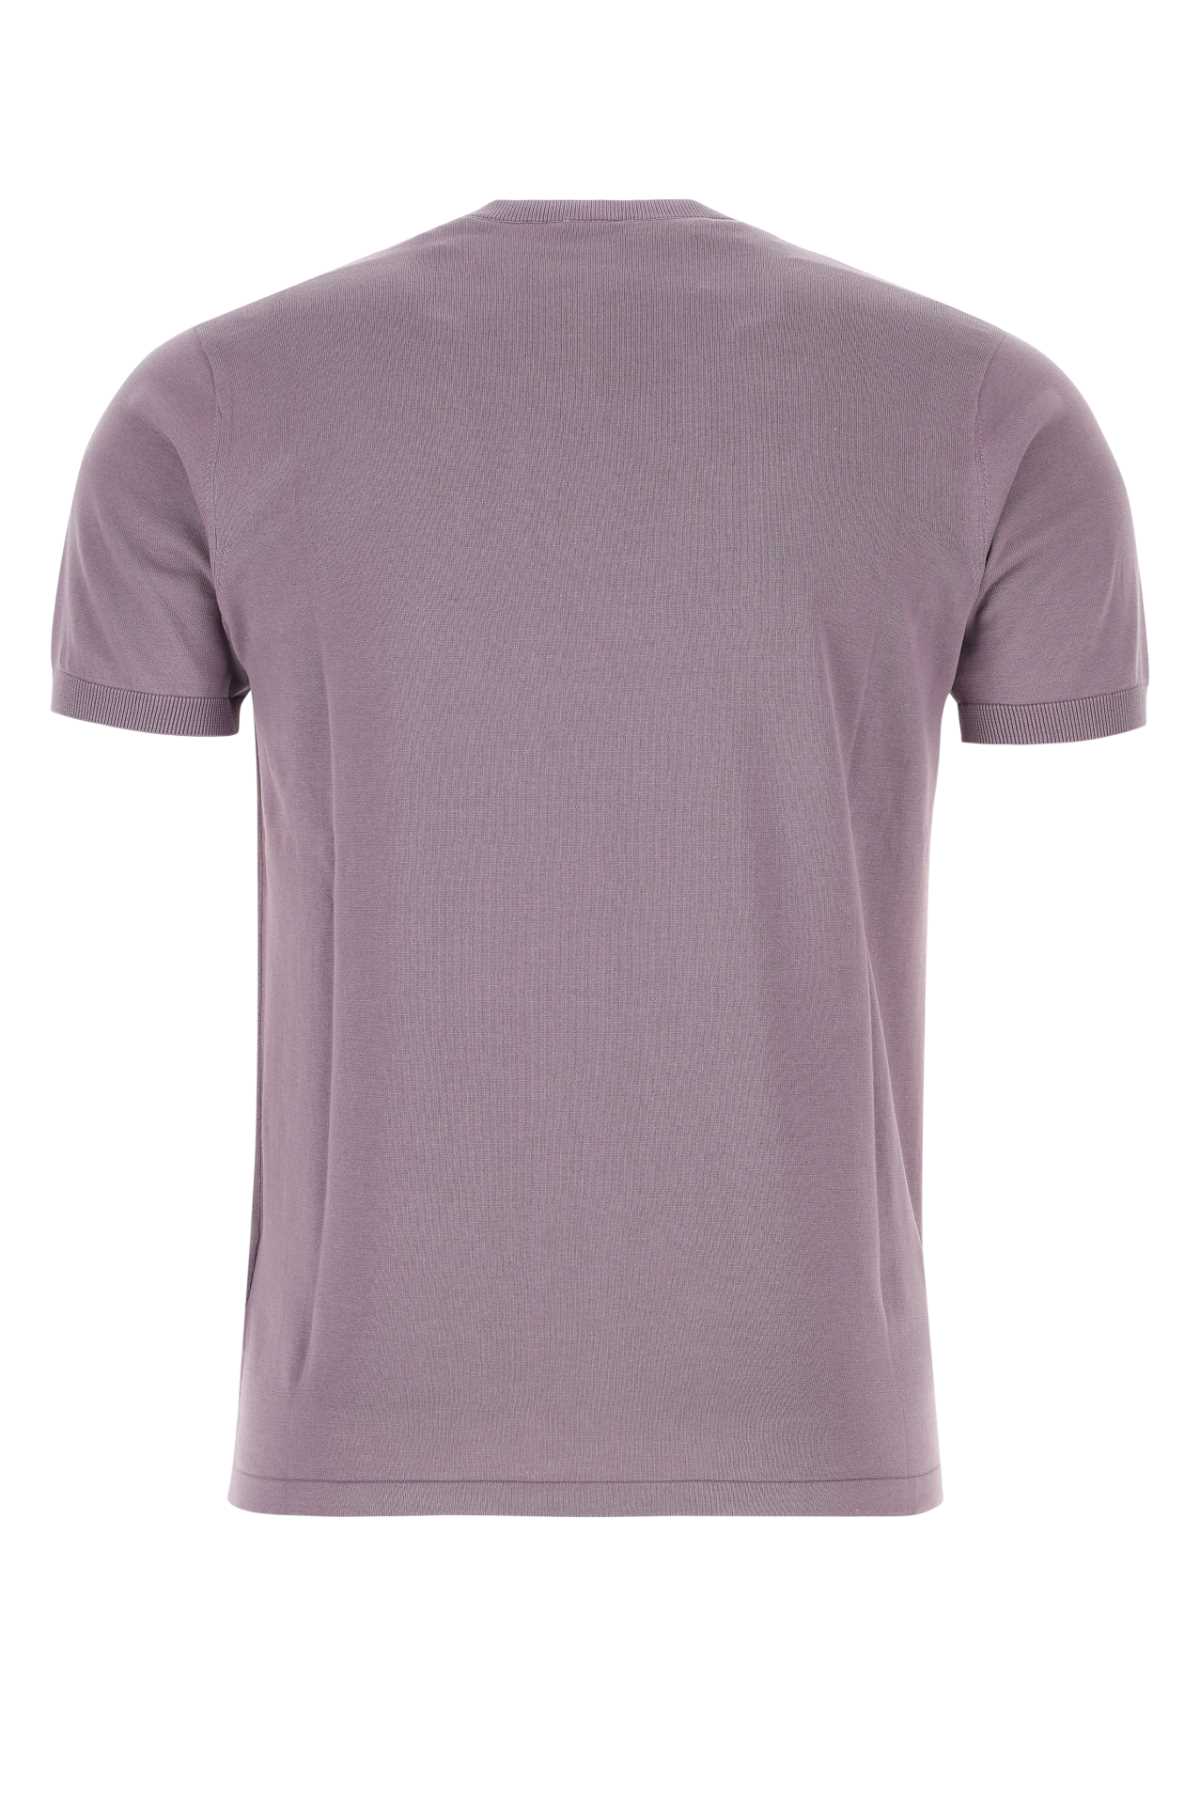 Aspesi Lilac Cotton T-shirt In 01148